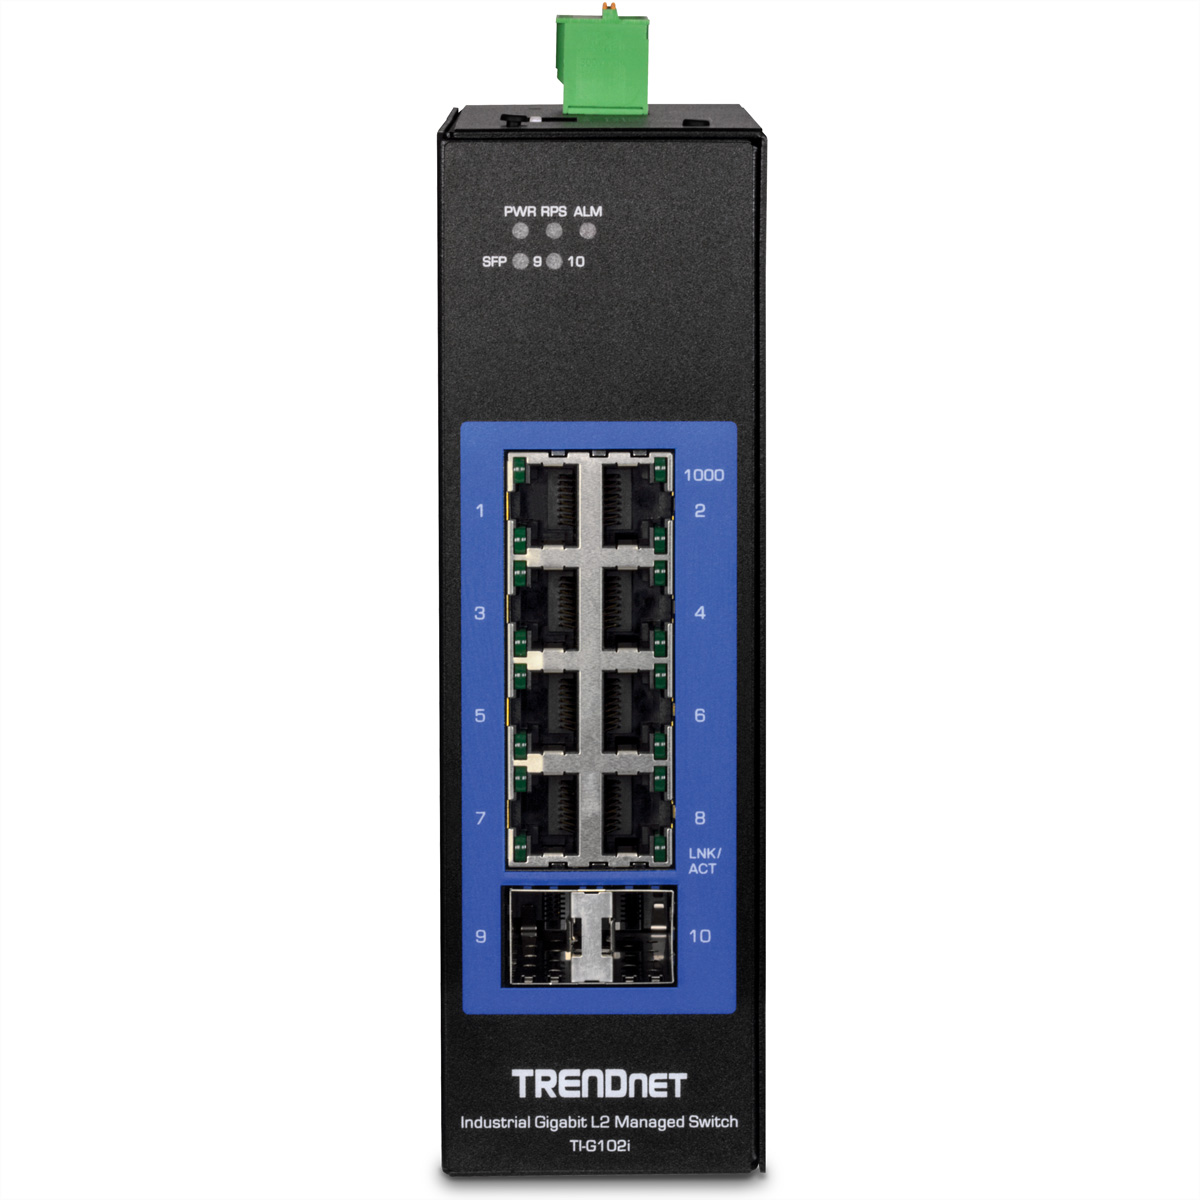 TRENDNET TI-G102i DIN-Rail Switch Gigabit Ethernet Gigabit Industrial L2 10-Port Switch